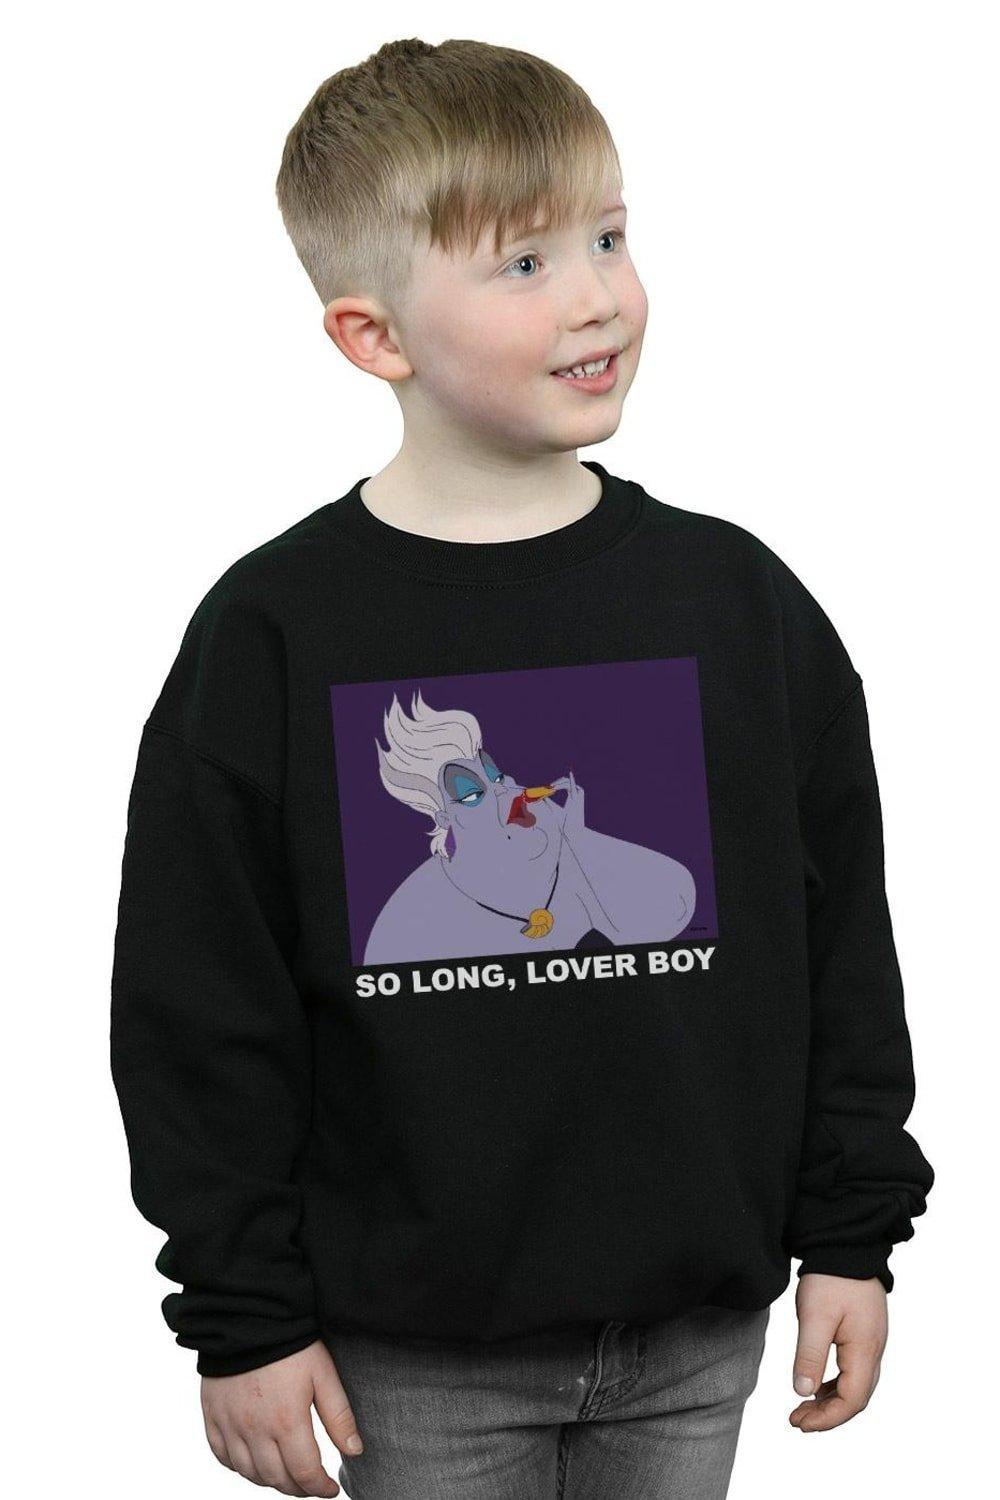 The Little Mermaid Ursula Lover Boy Sweatshirt